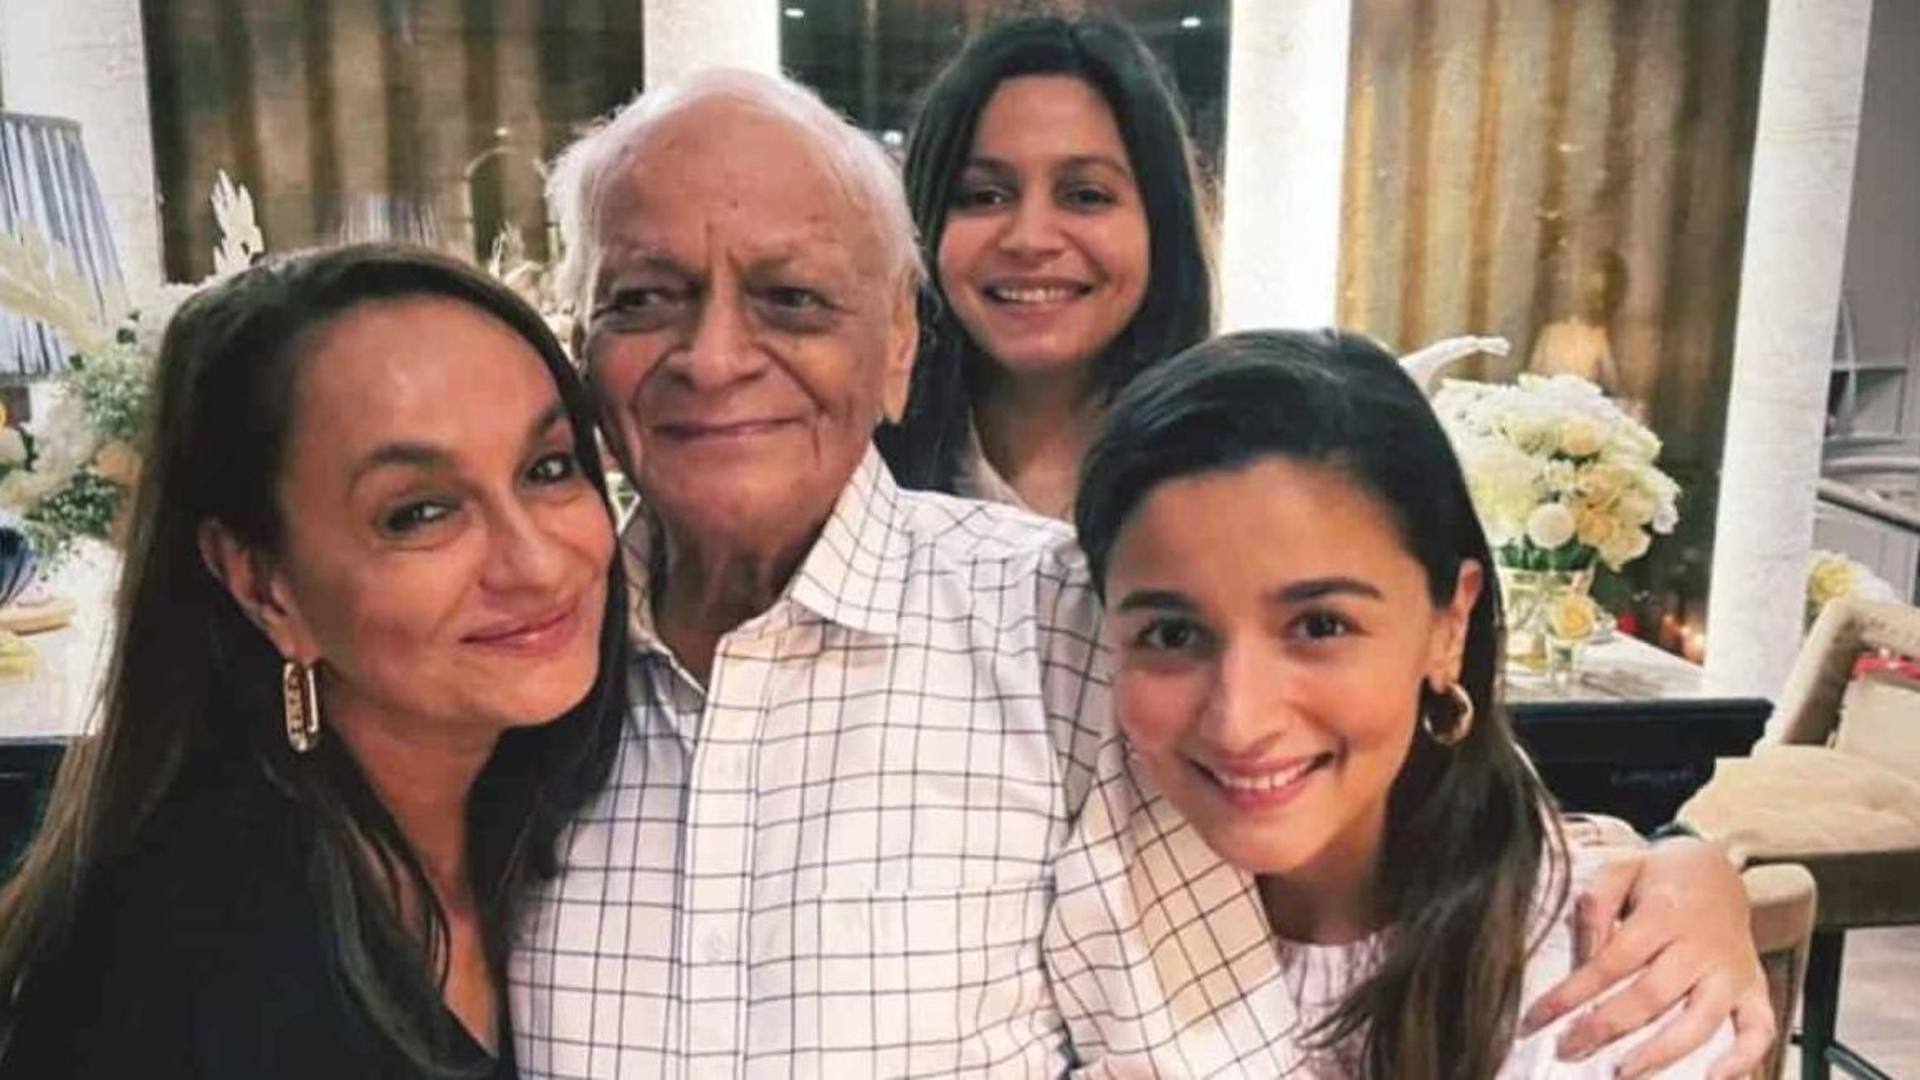 'My grandpa. My hero': Alia Bhatt mourns grandfather's death